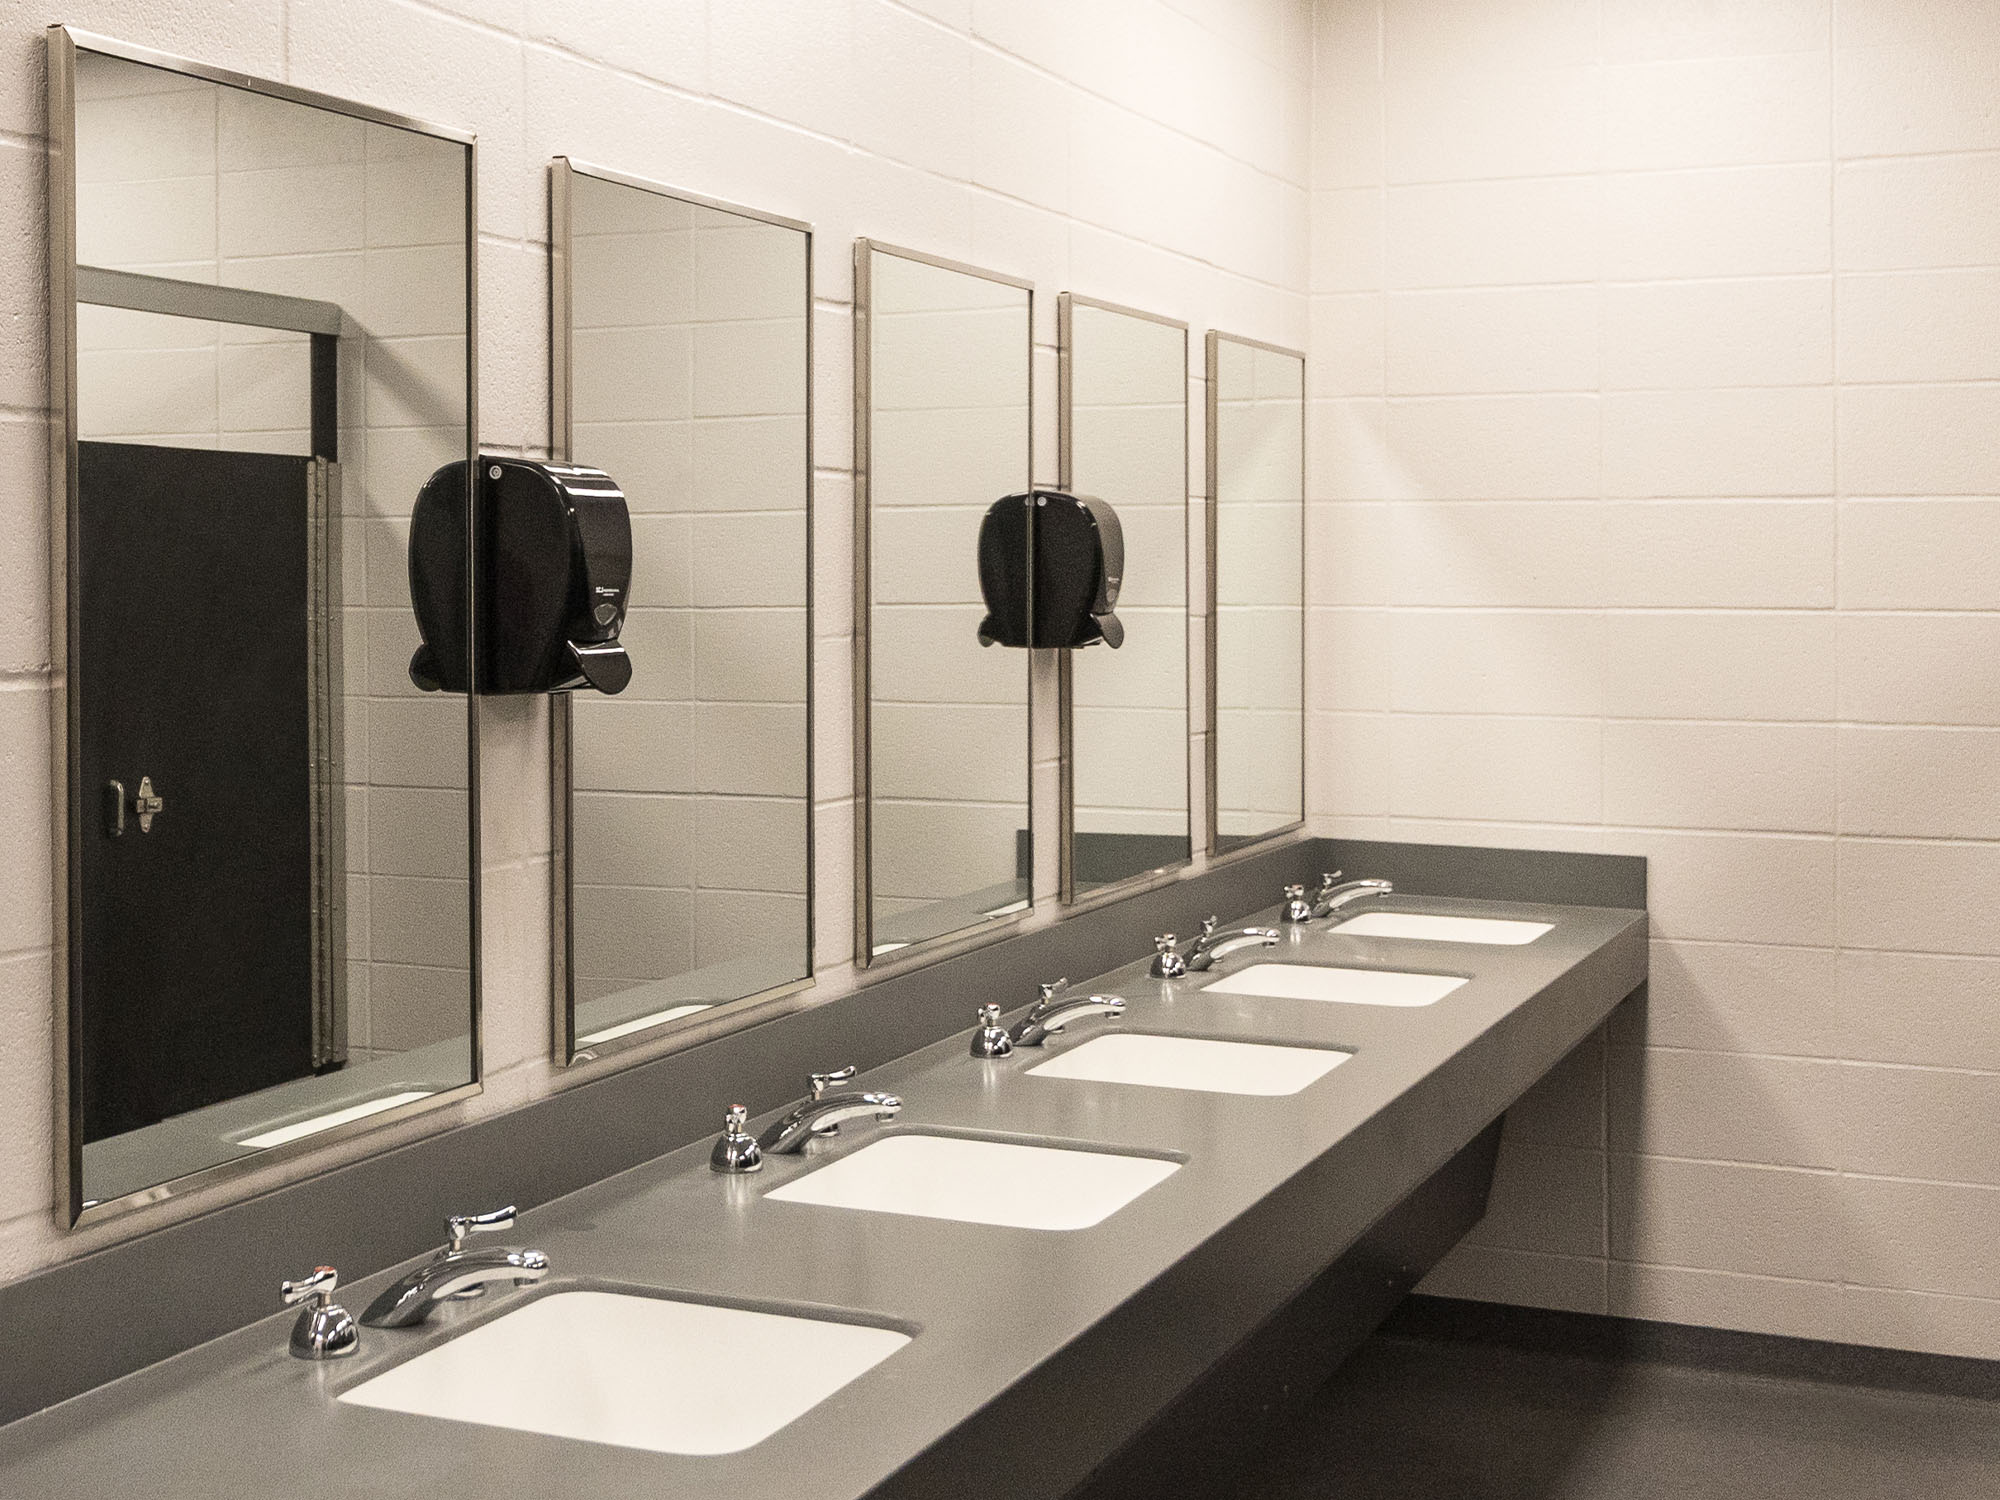 mirrors in high school bathroom